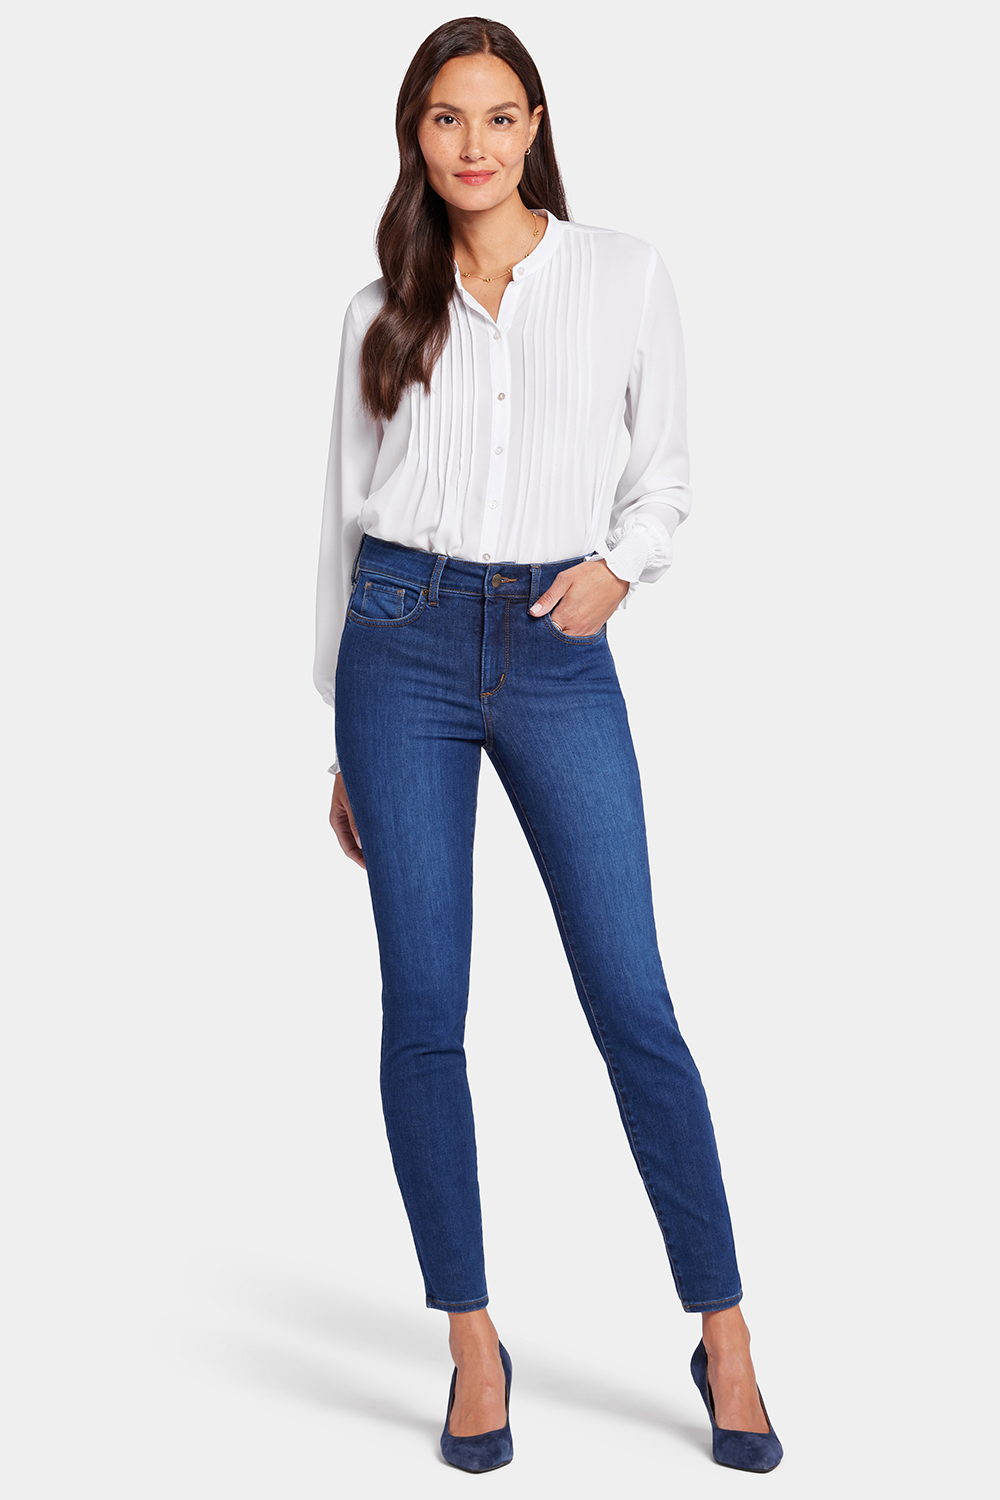 Women Ami Skinny Jeans In Petite In Cooper, Size: 00p   Denim